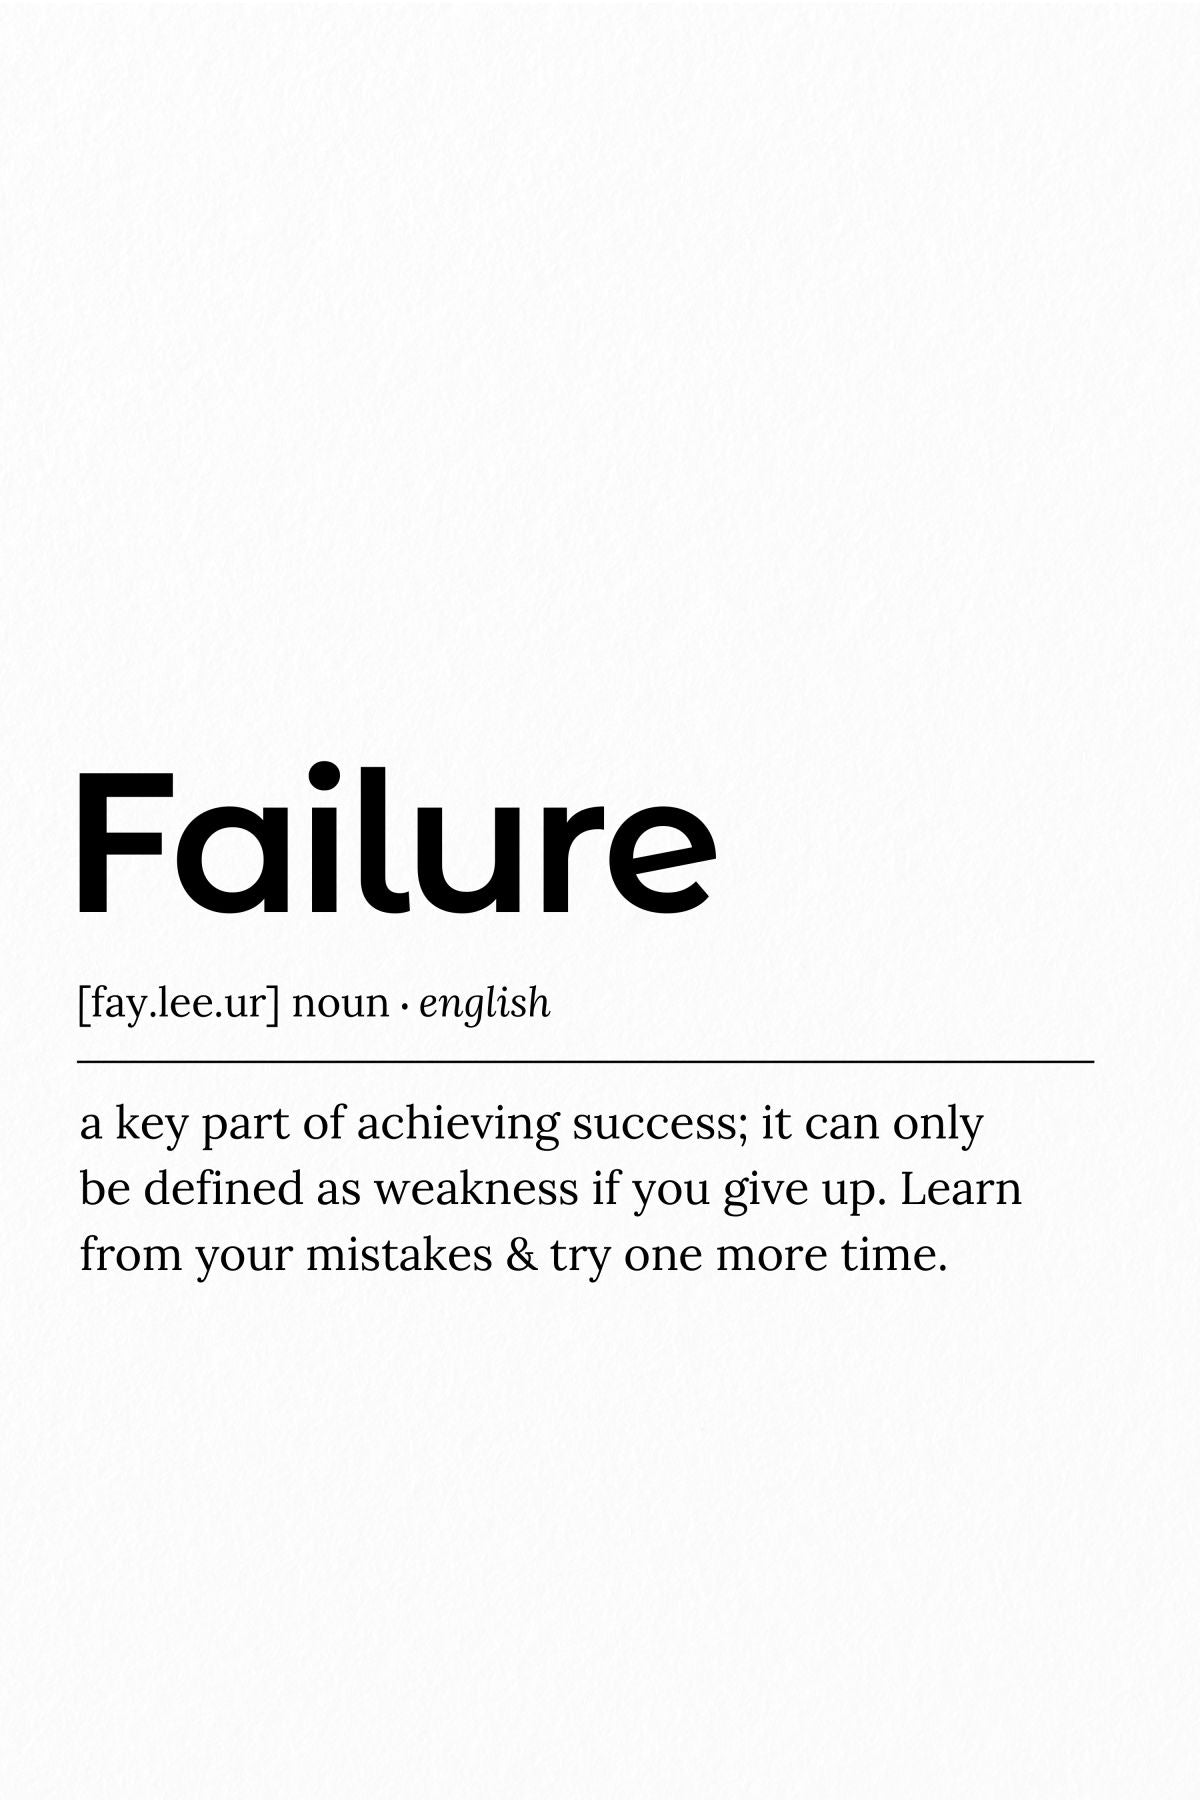 Failure Definition